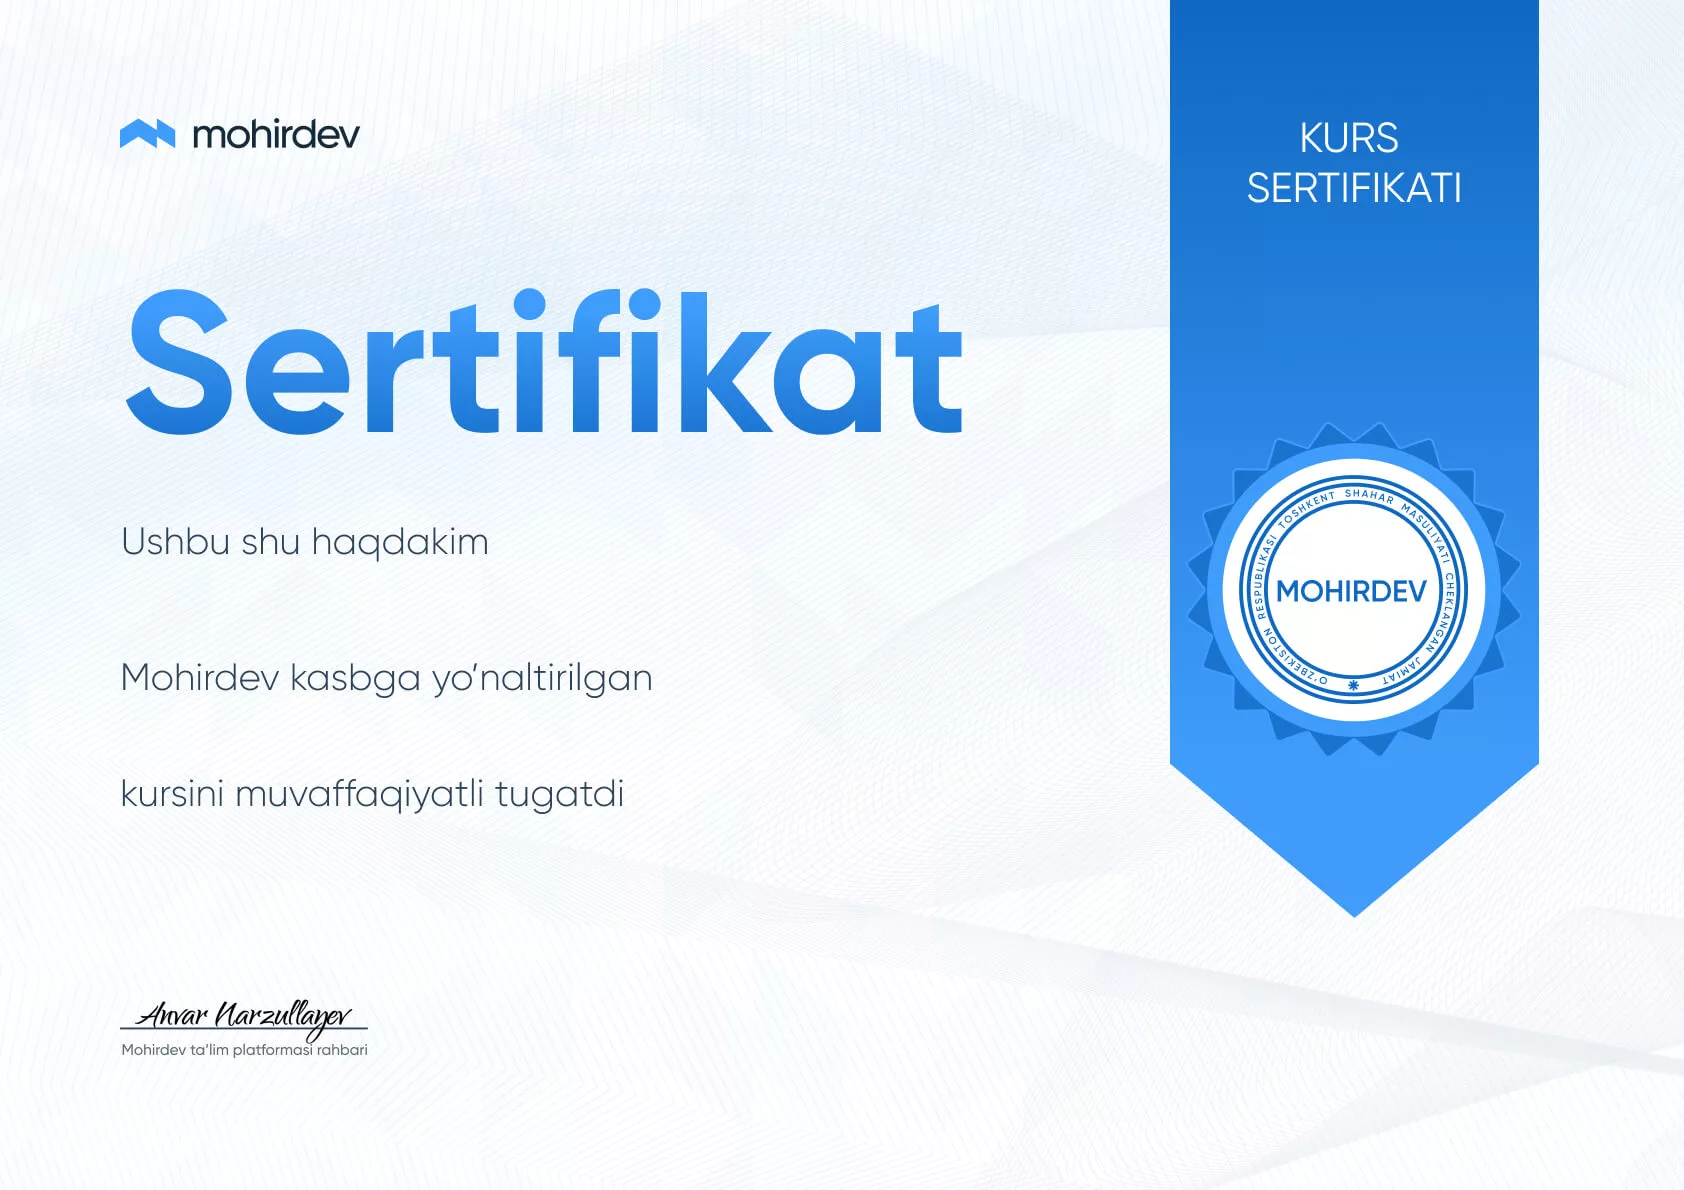 Mohirdev tomonidan sertifikat